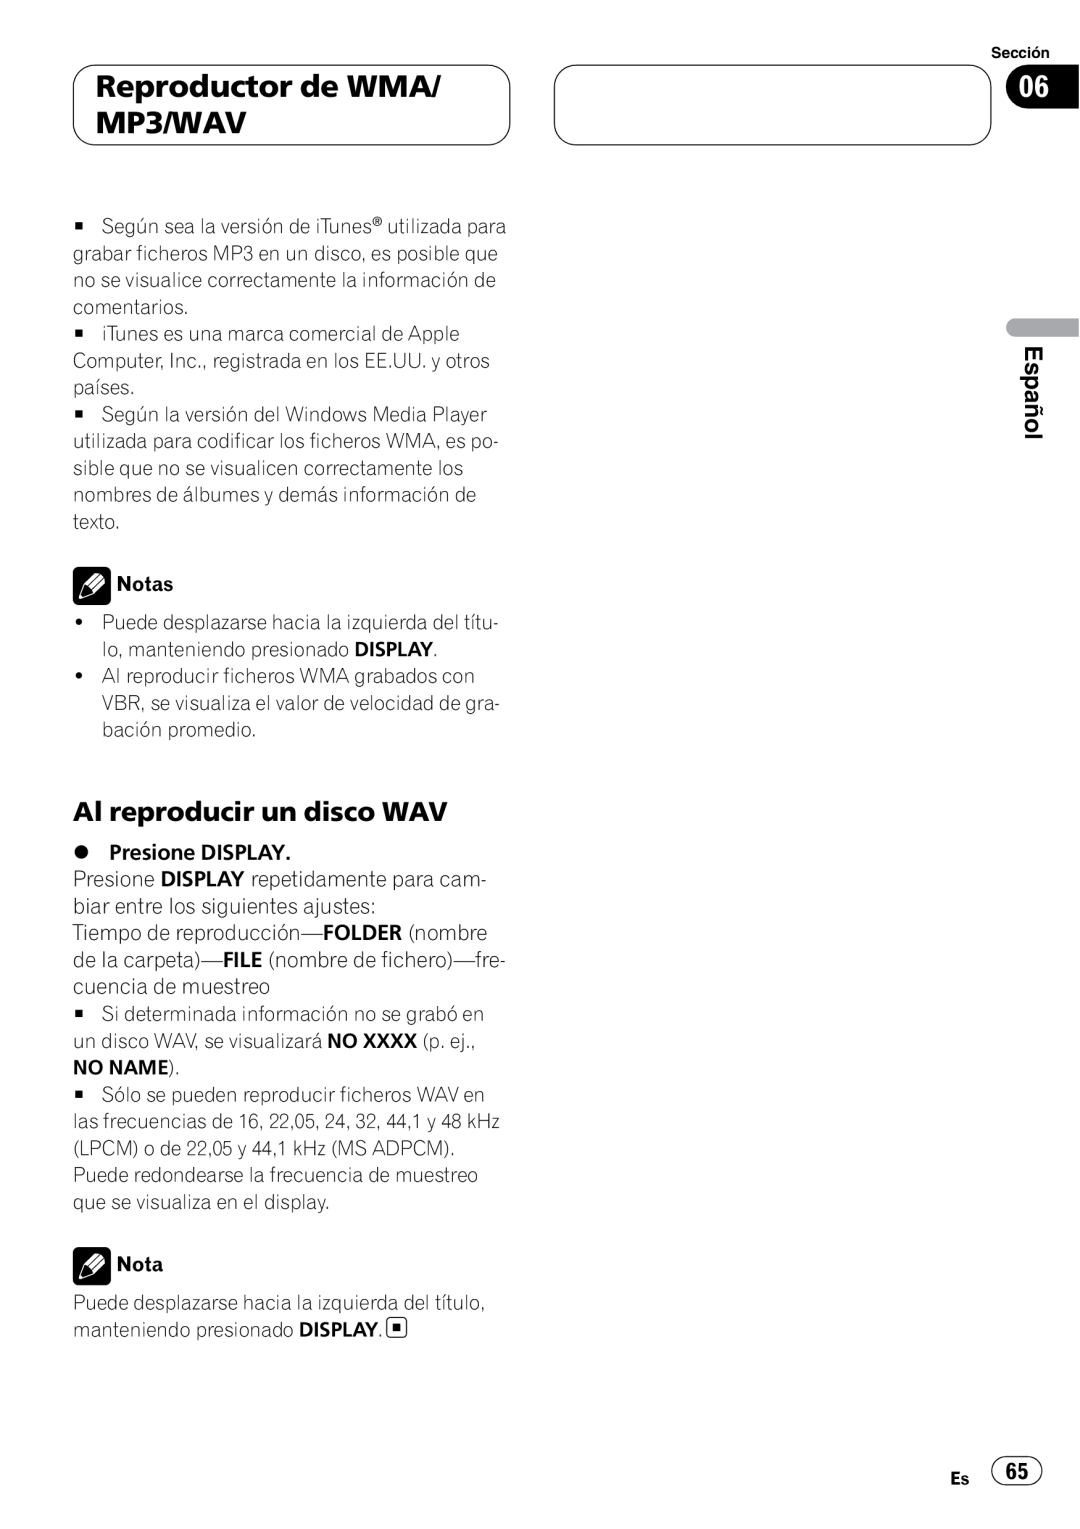 Pioneer RDS DEH-P40MP operation manual Al reproducir un disco WAV, Reproductor de WMA/ MP3/WAV, Español 